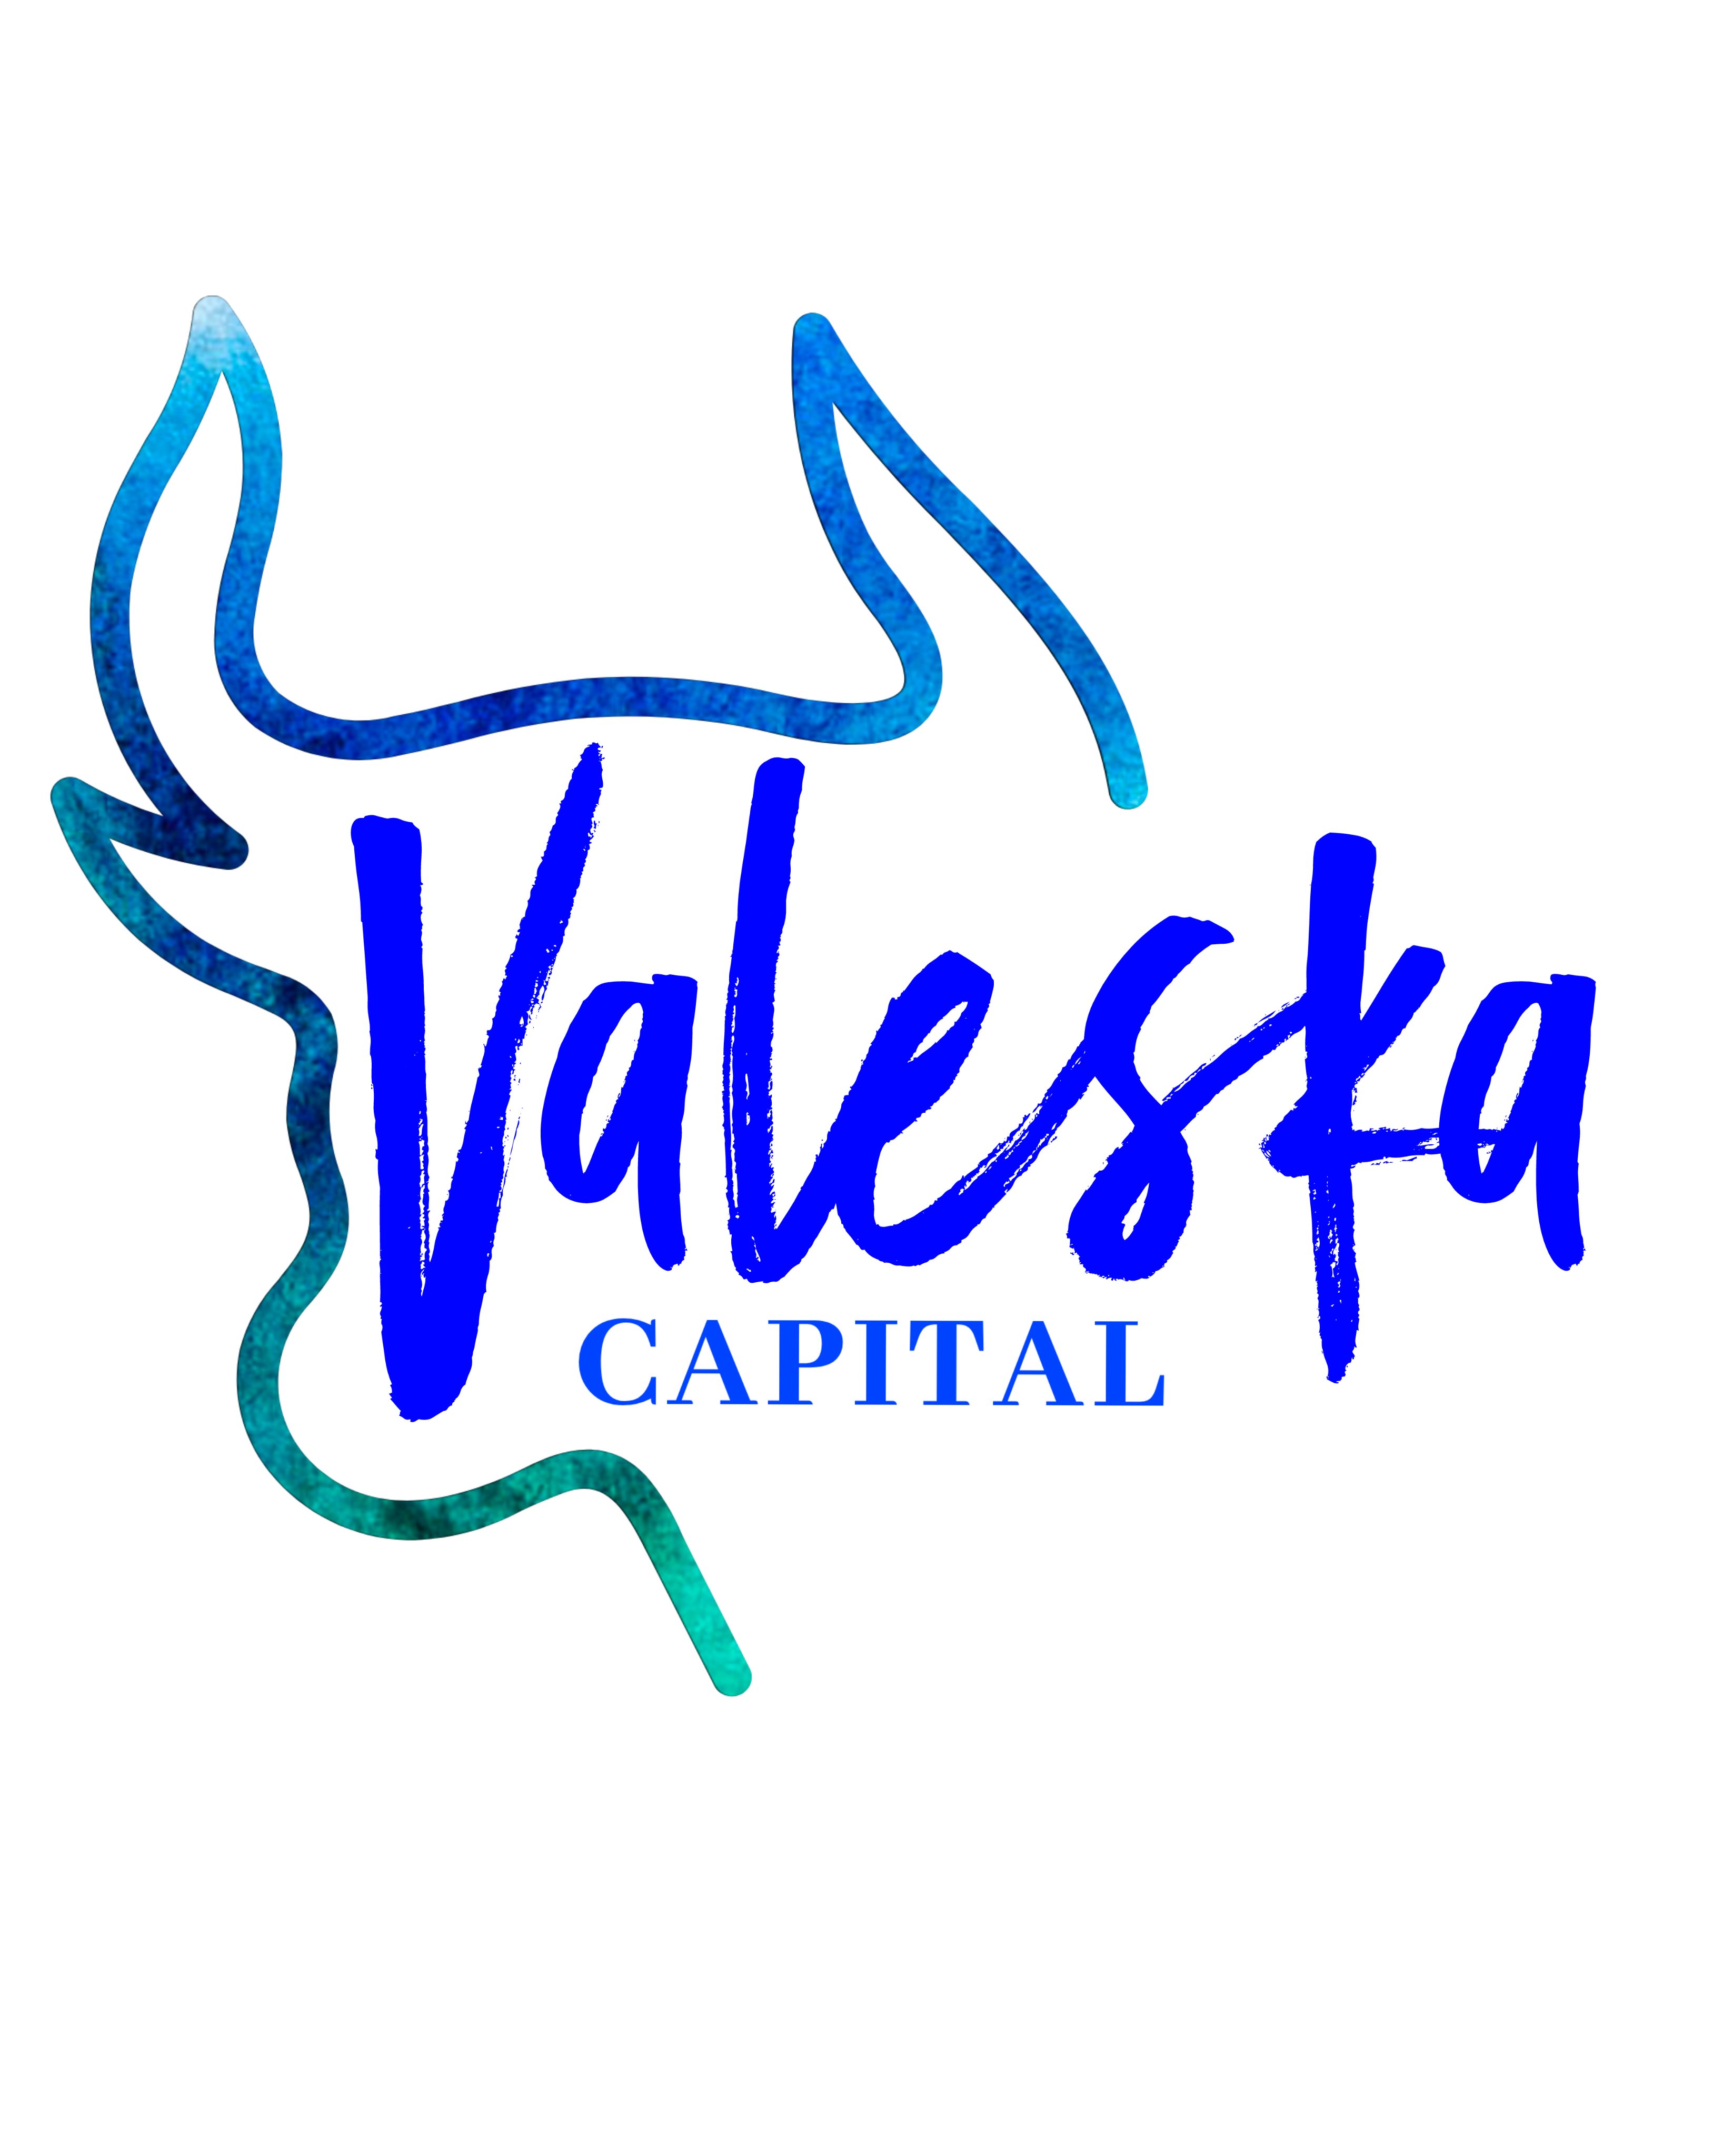 Valeska Capital